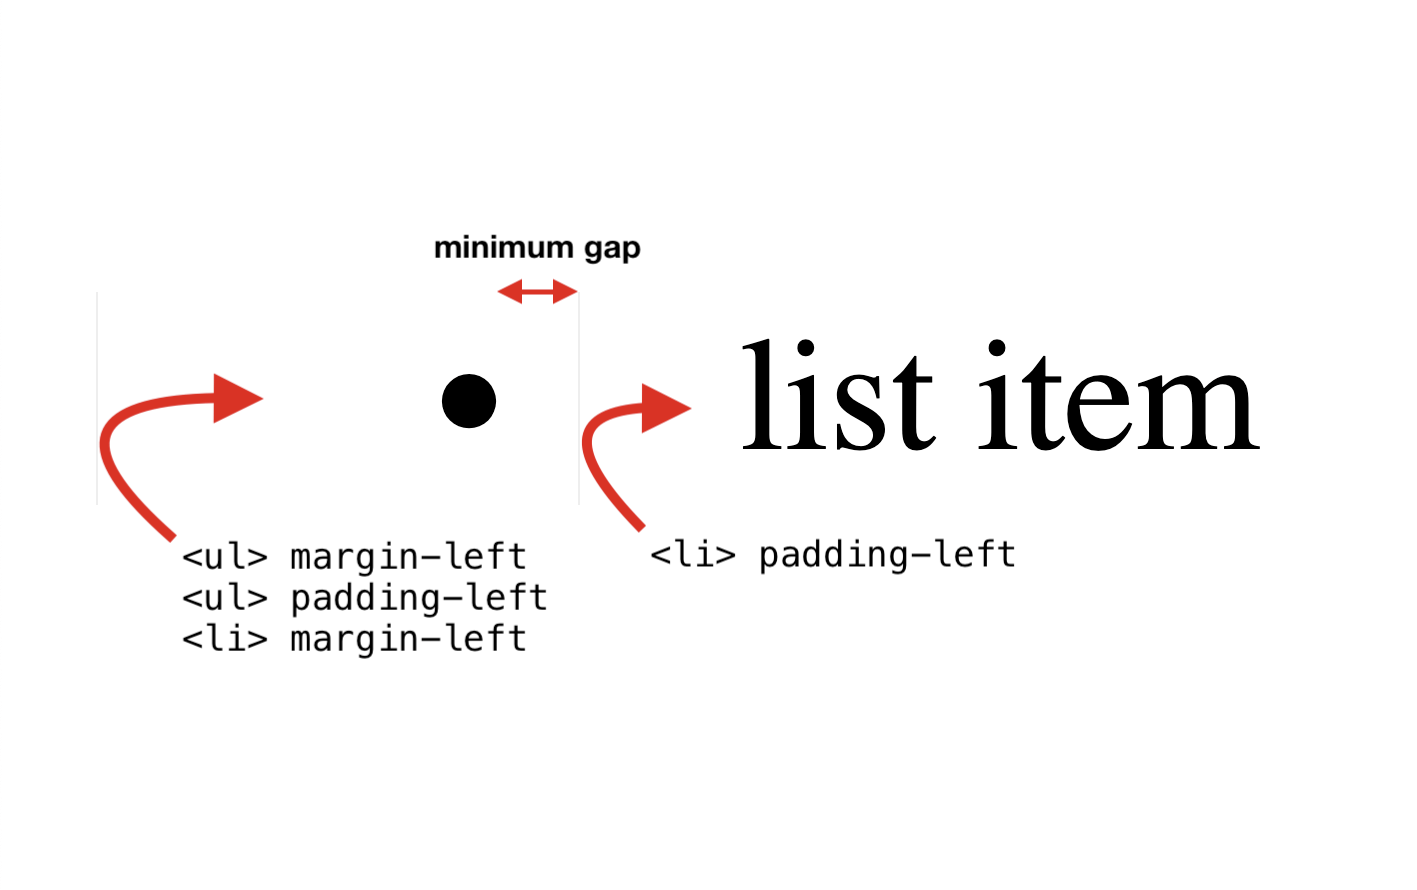 First three properties: UL margin-left, UL padding-left, LI margin-left. Fourth property: LI padding-left.